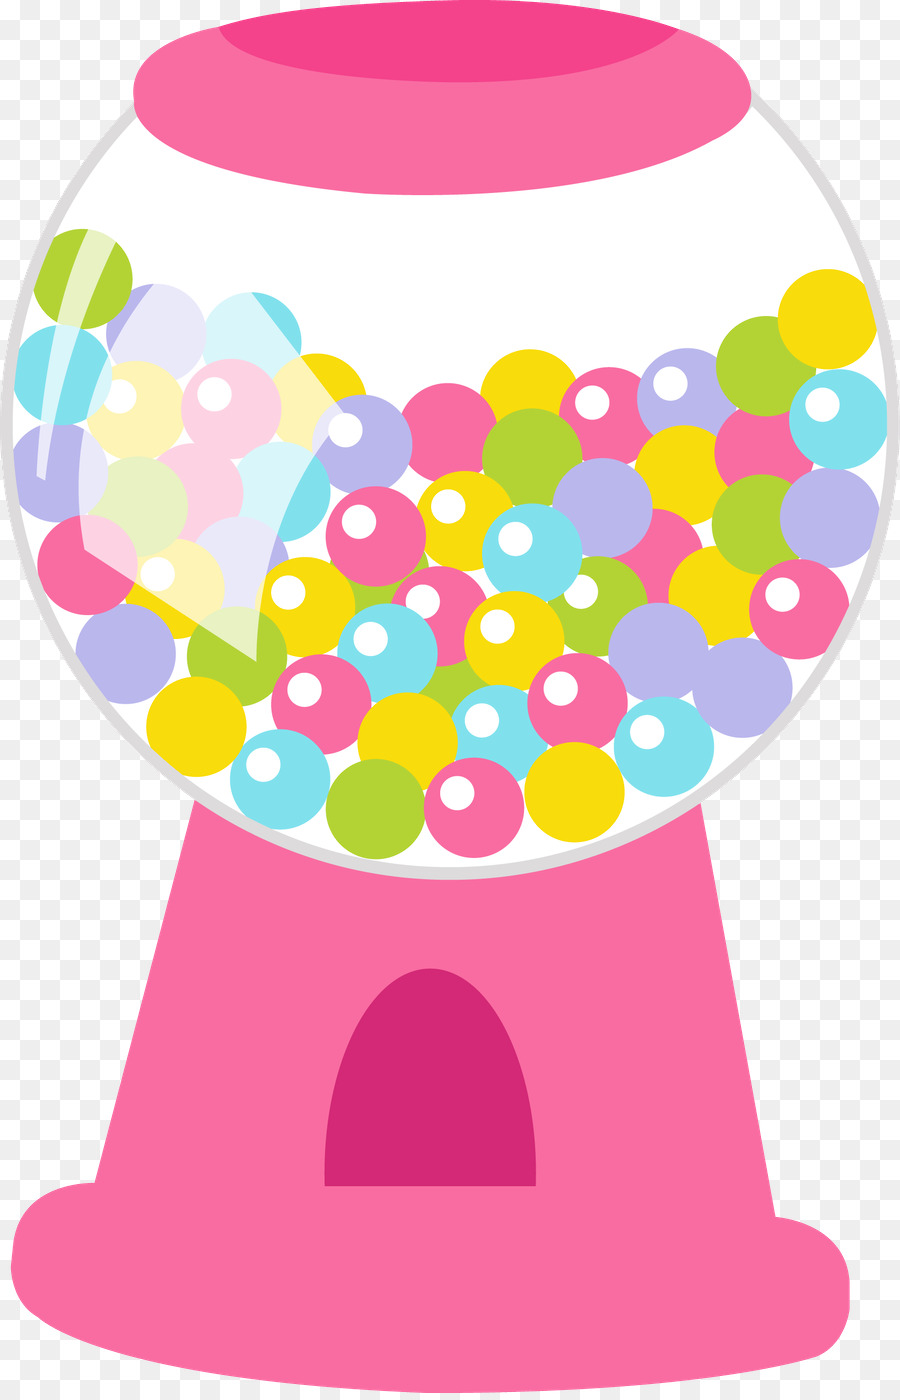 Candyland clipart hard candy. Land lollipop clip art